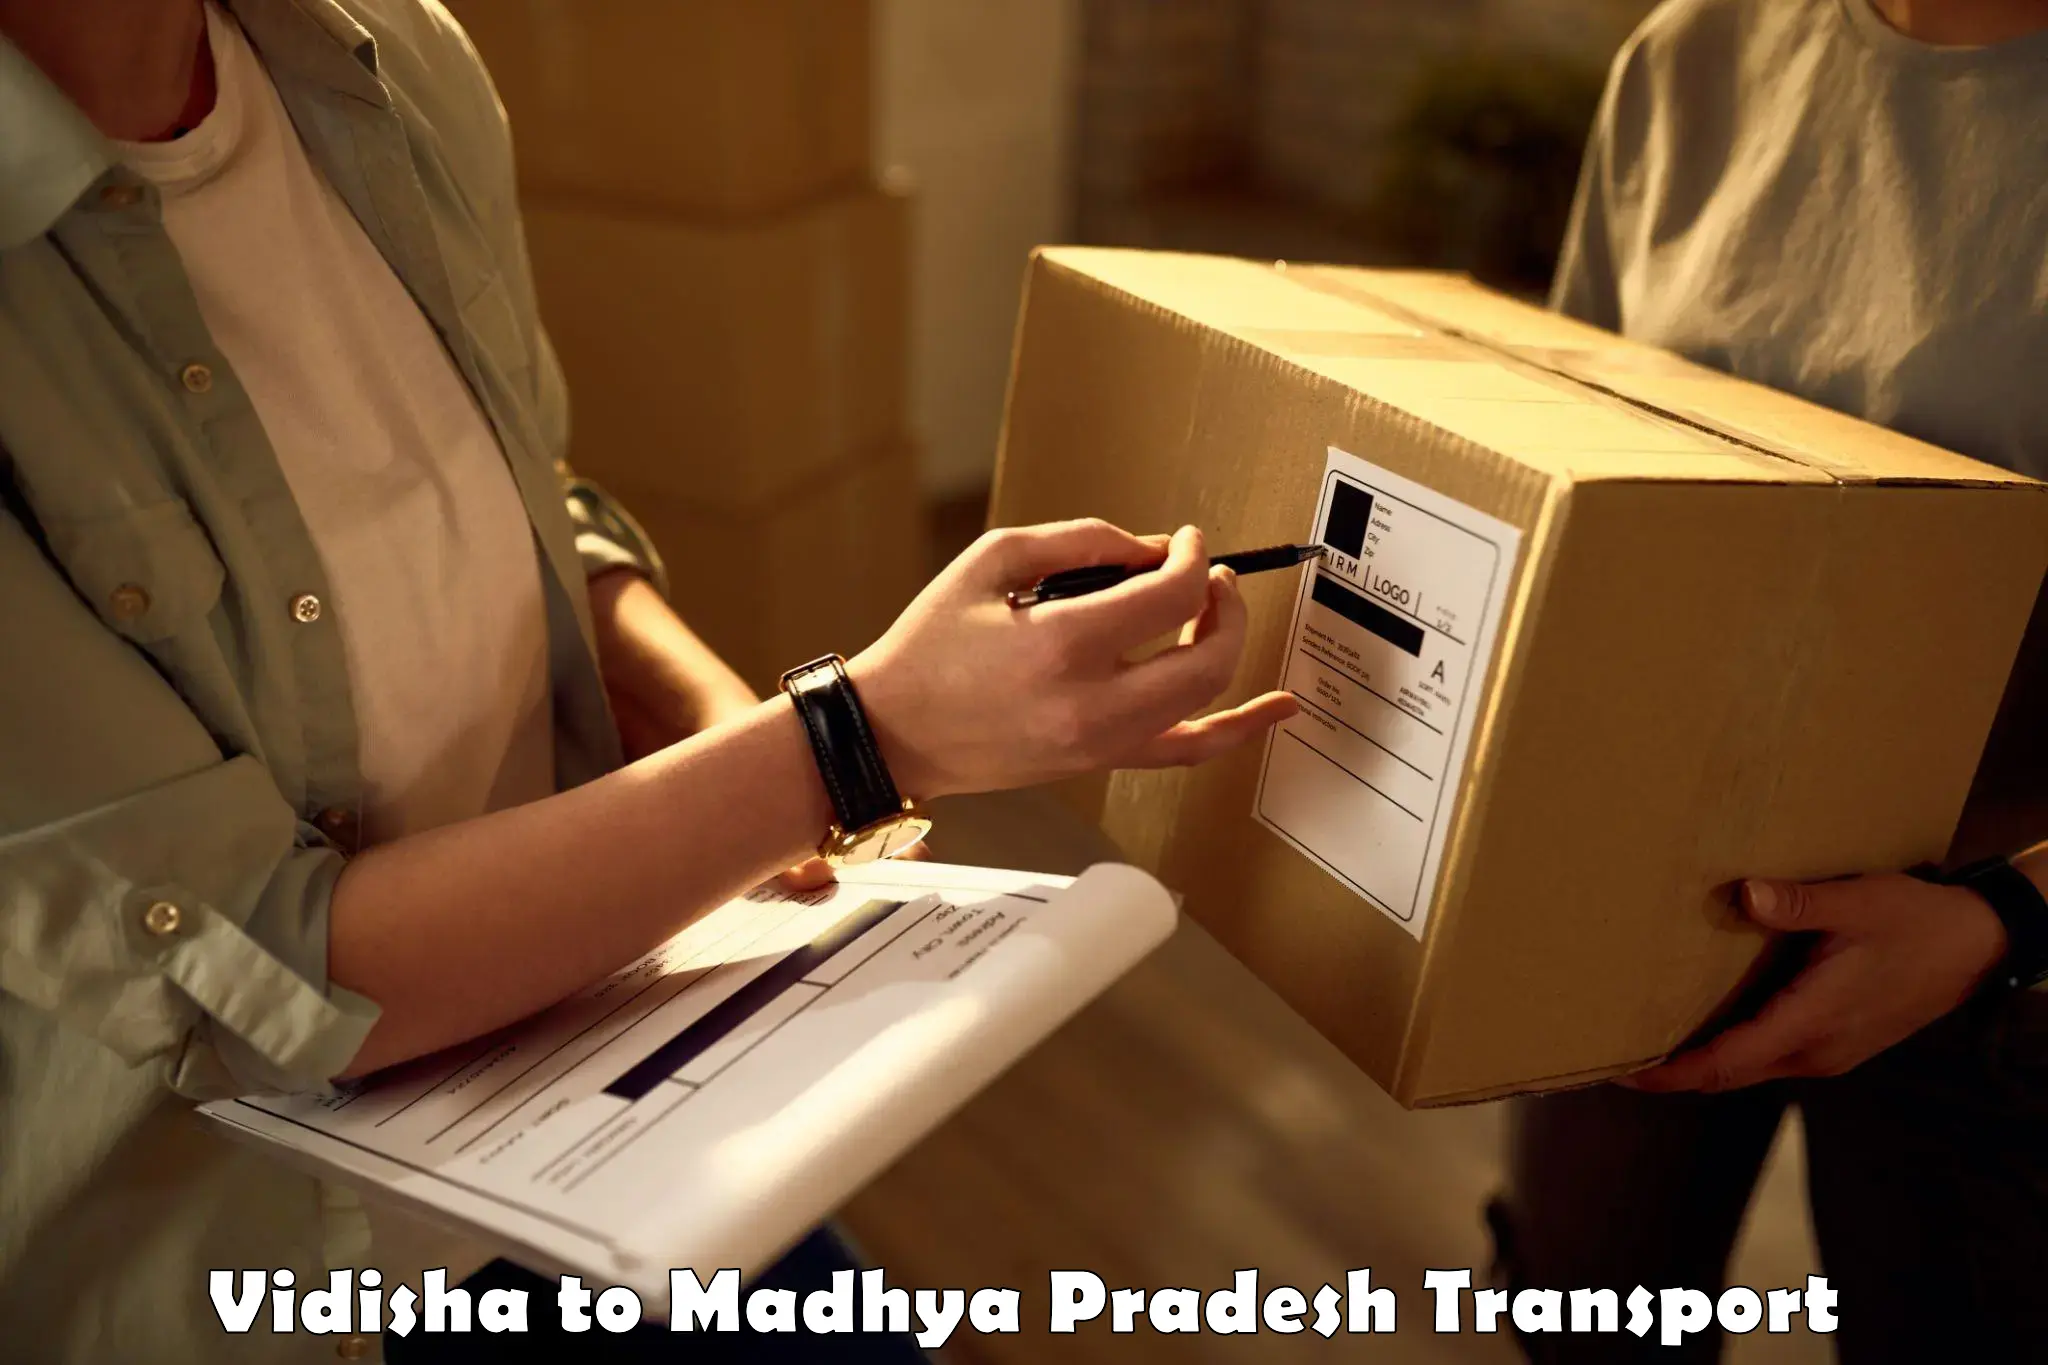 Transport shared services Vidisha to Indore